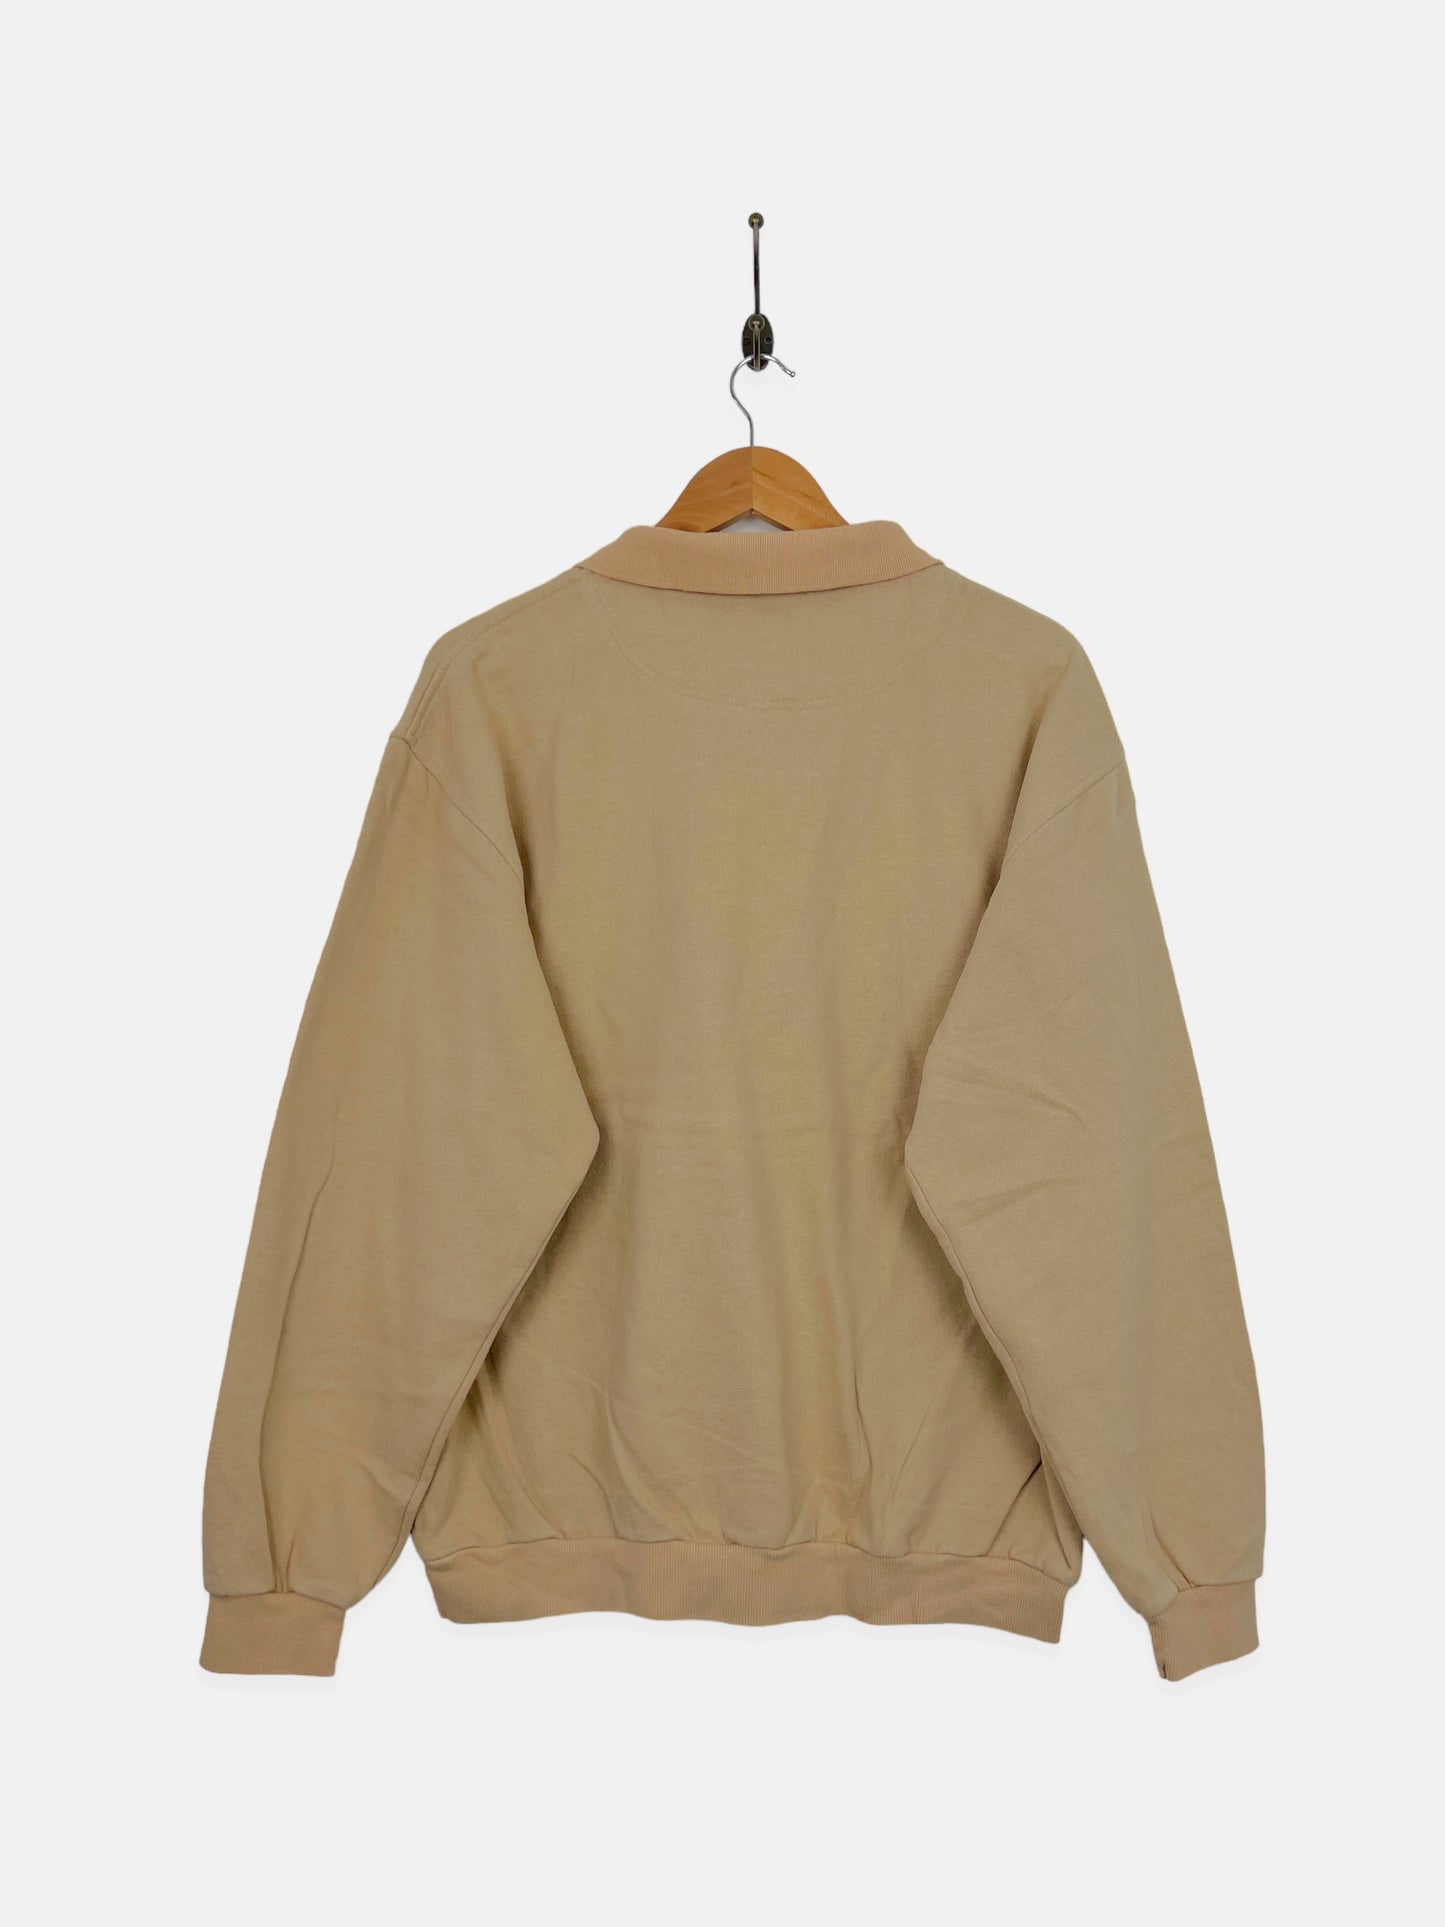 90's Beige Embroidered Vintage Collared Sweatshirt Size M-L